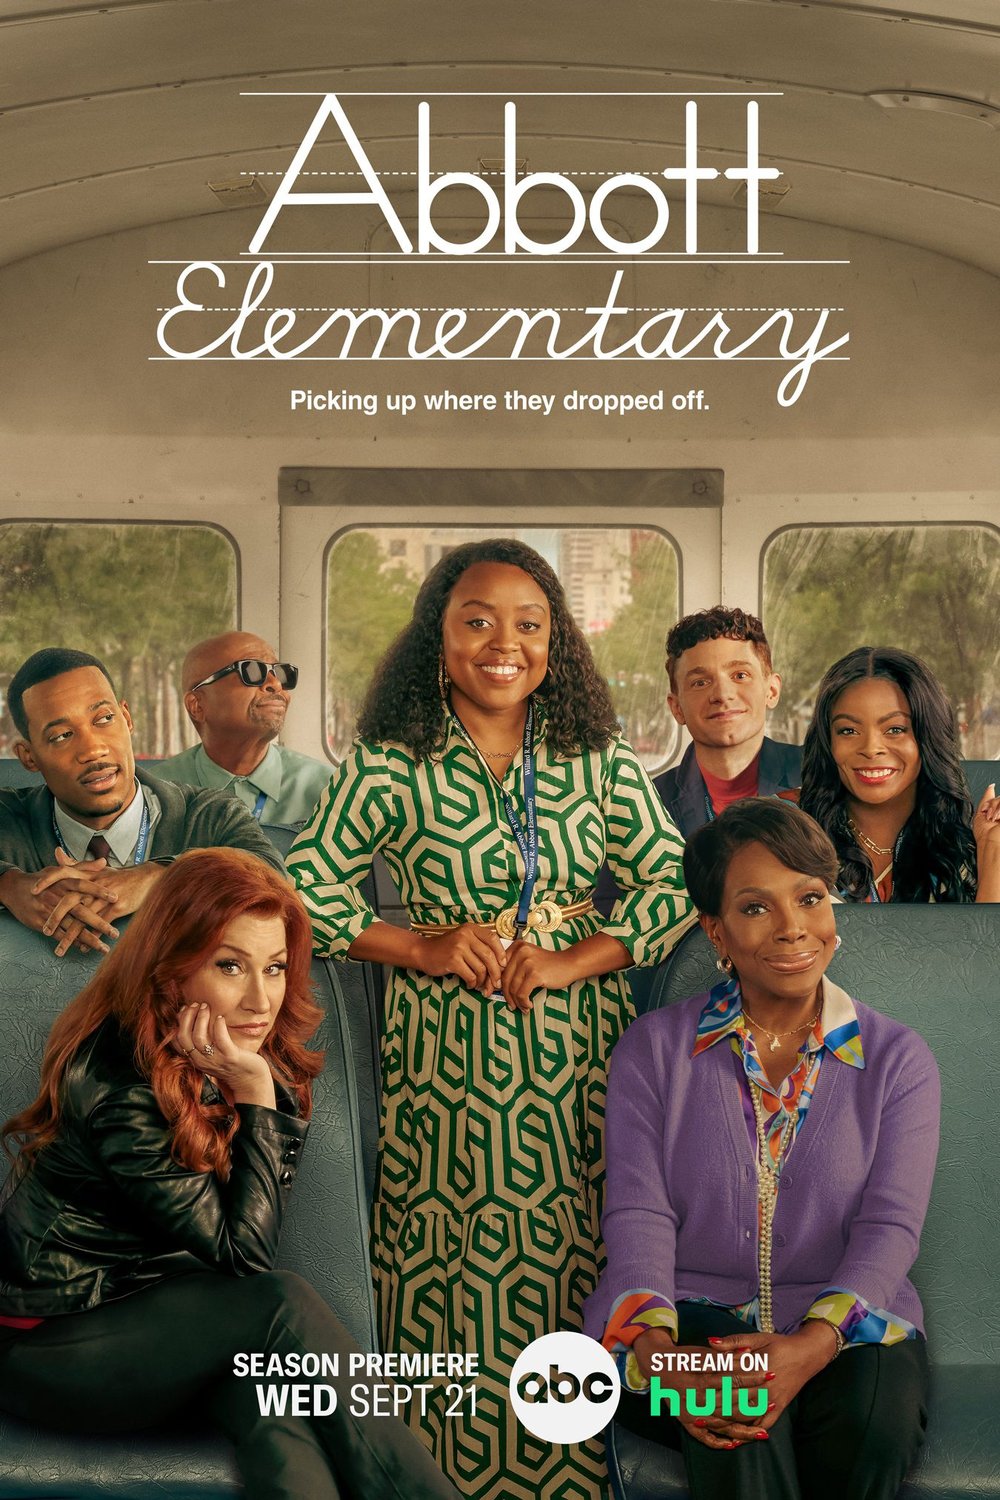 Poster of the movie Abbott Elementary